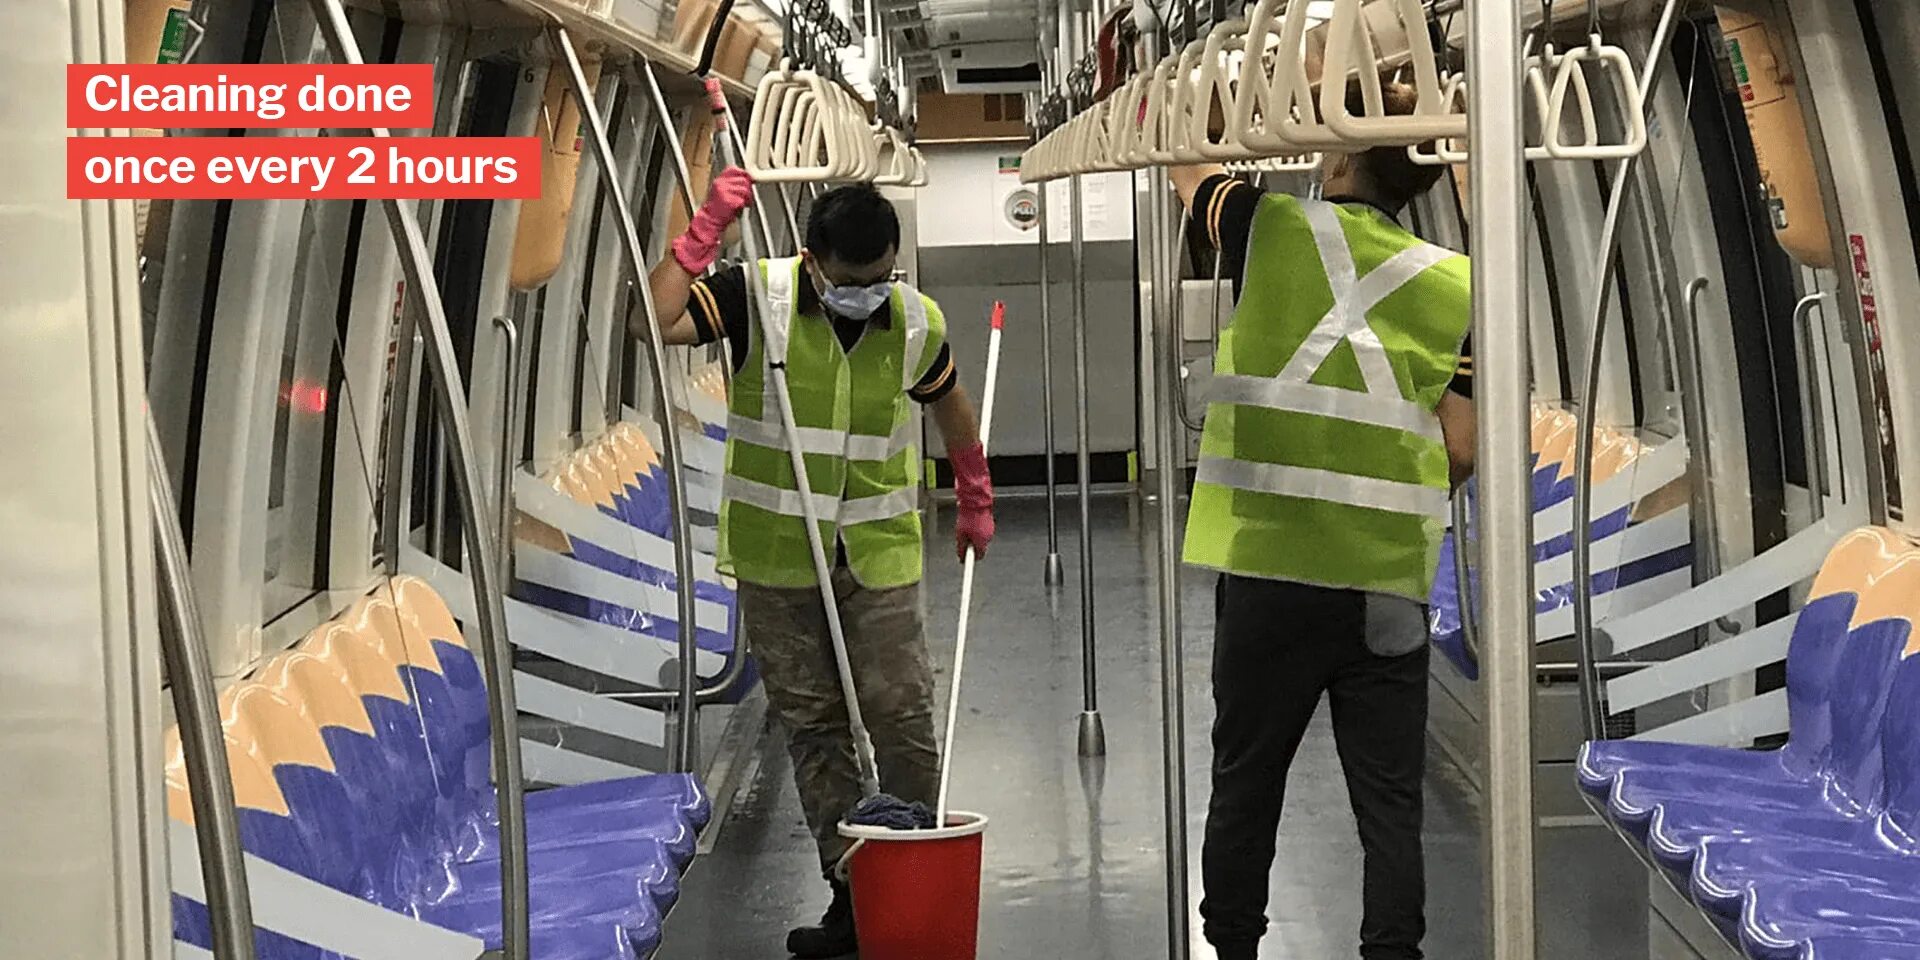 Public 14. No commute тренд. Бросать снег общественный транспорт Гонконг. Cleaning of public transport. Clean of public transport.